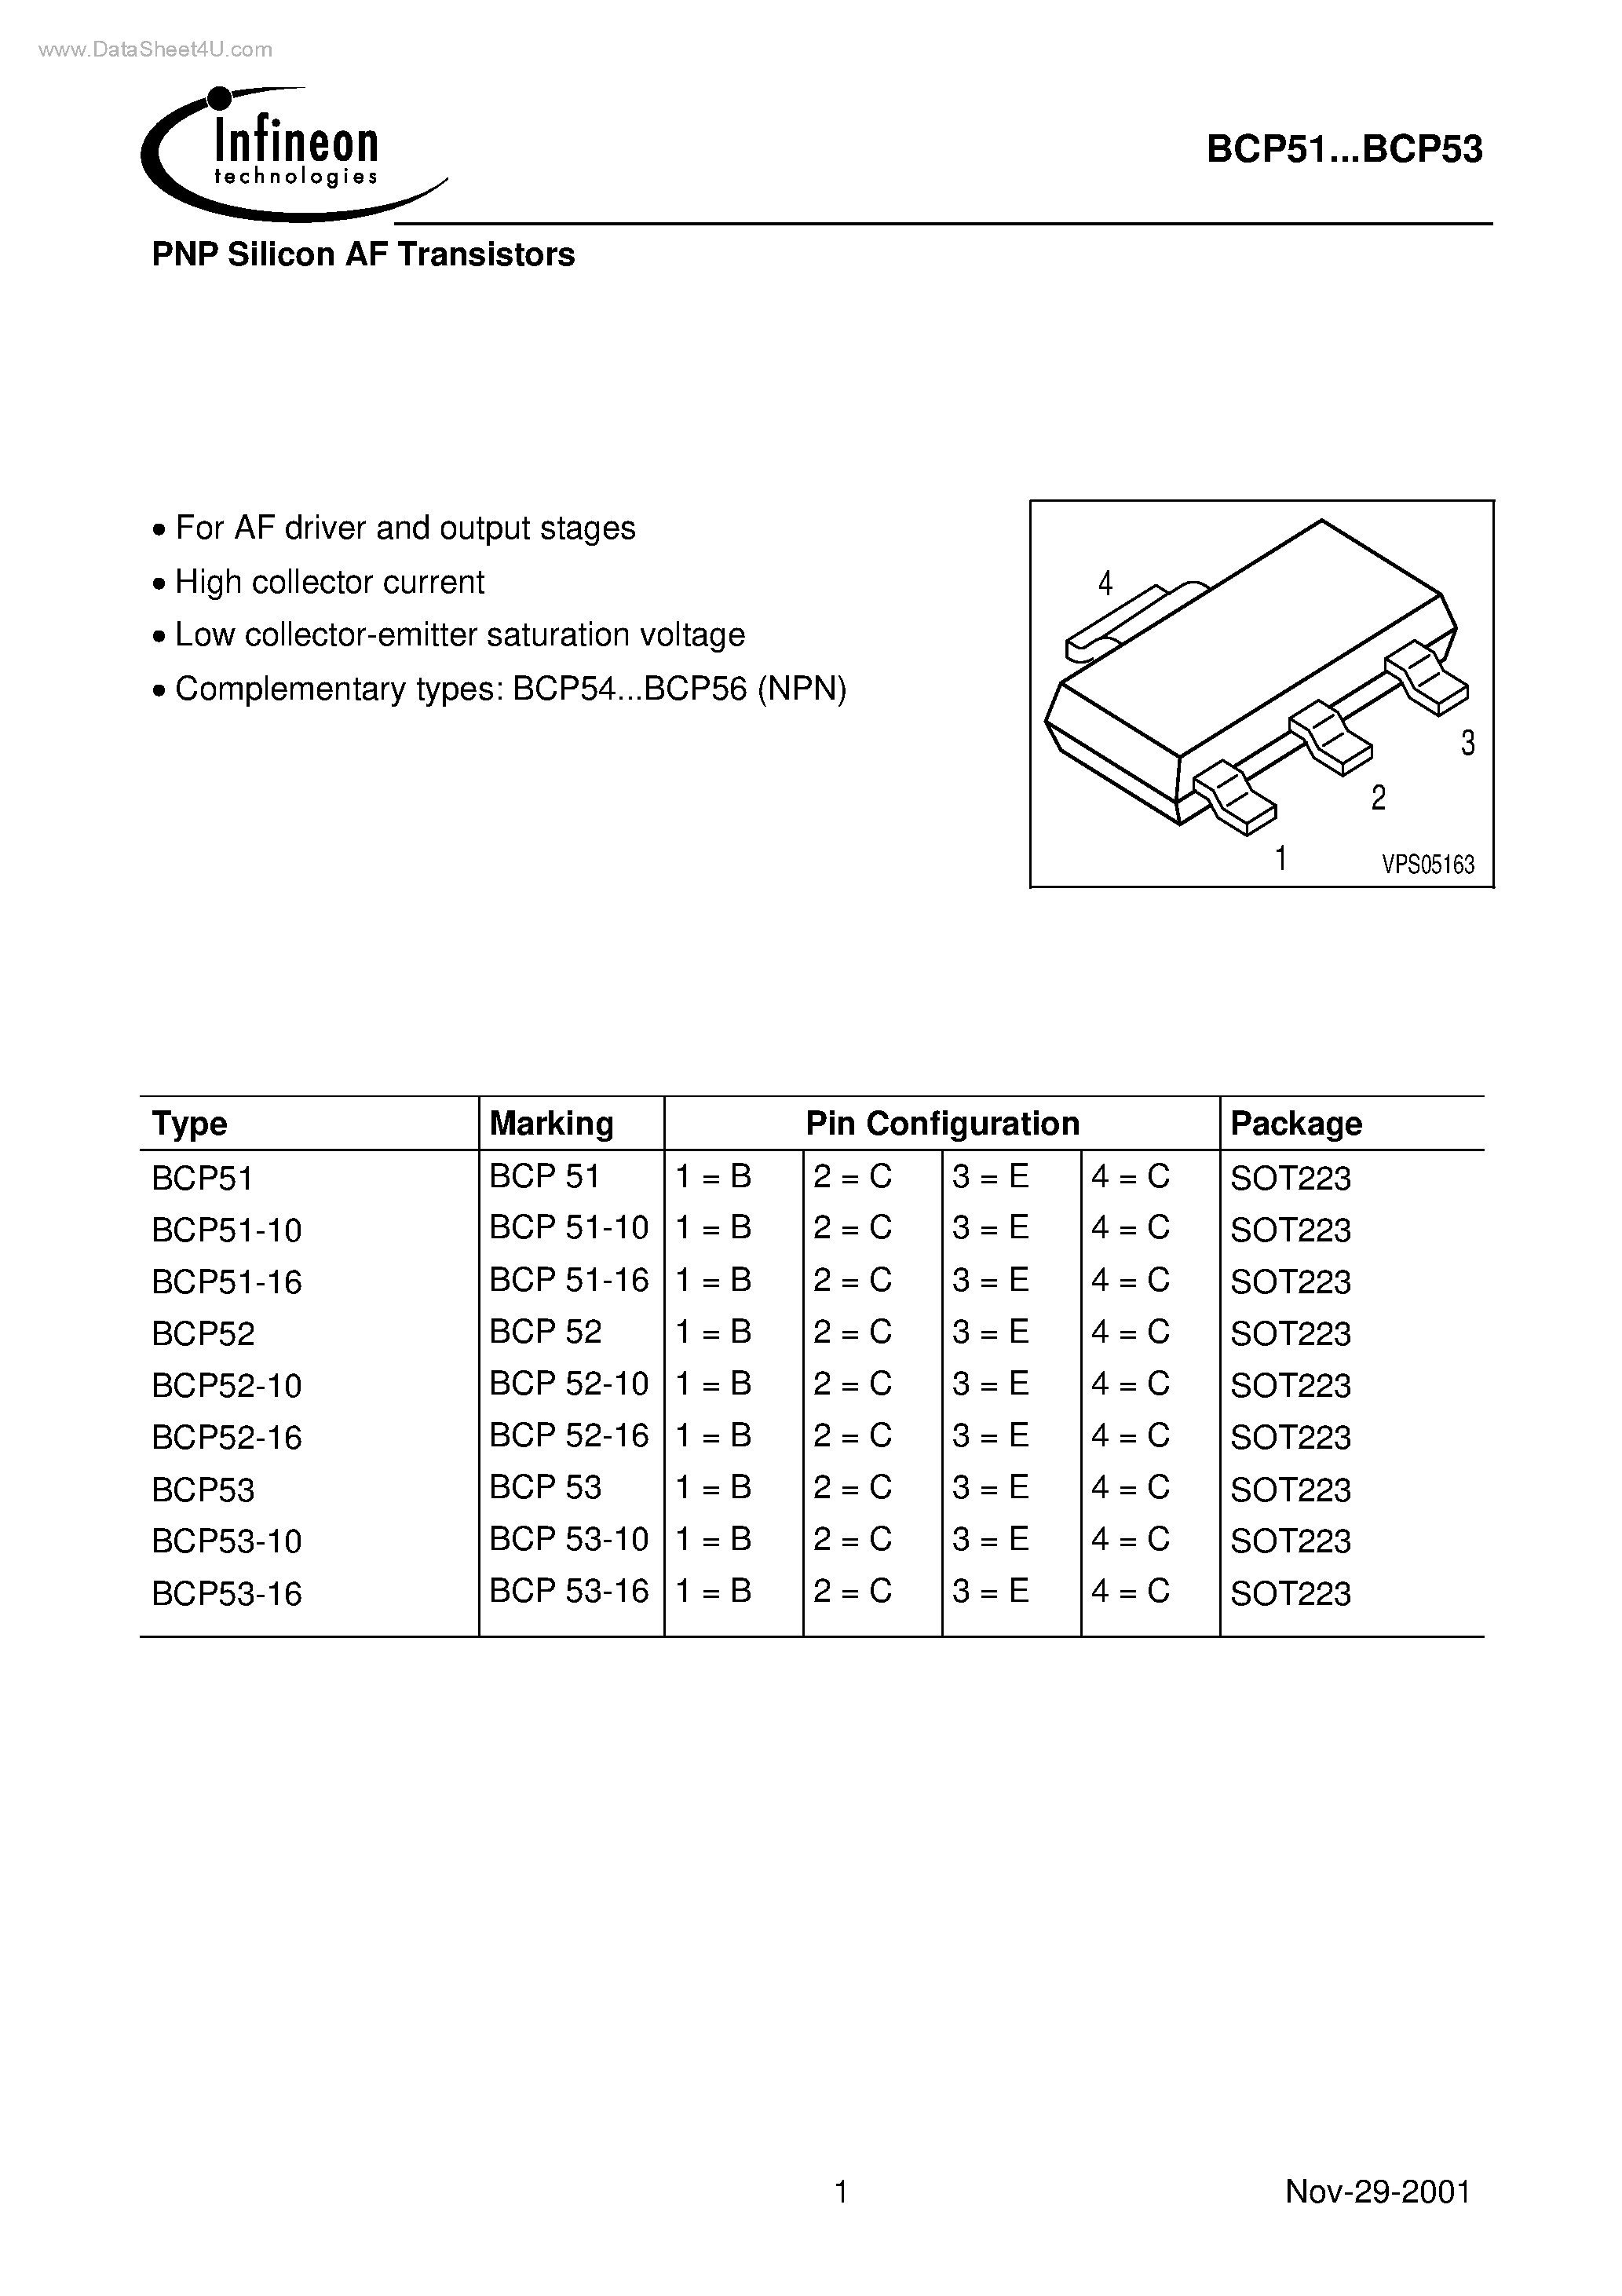 Datasheet BCP51-10 - PNP Silicon AF Transistors page 1